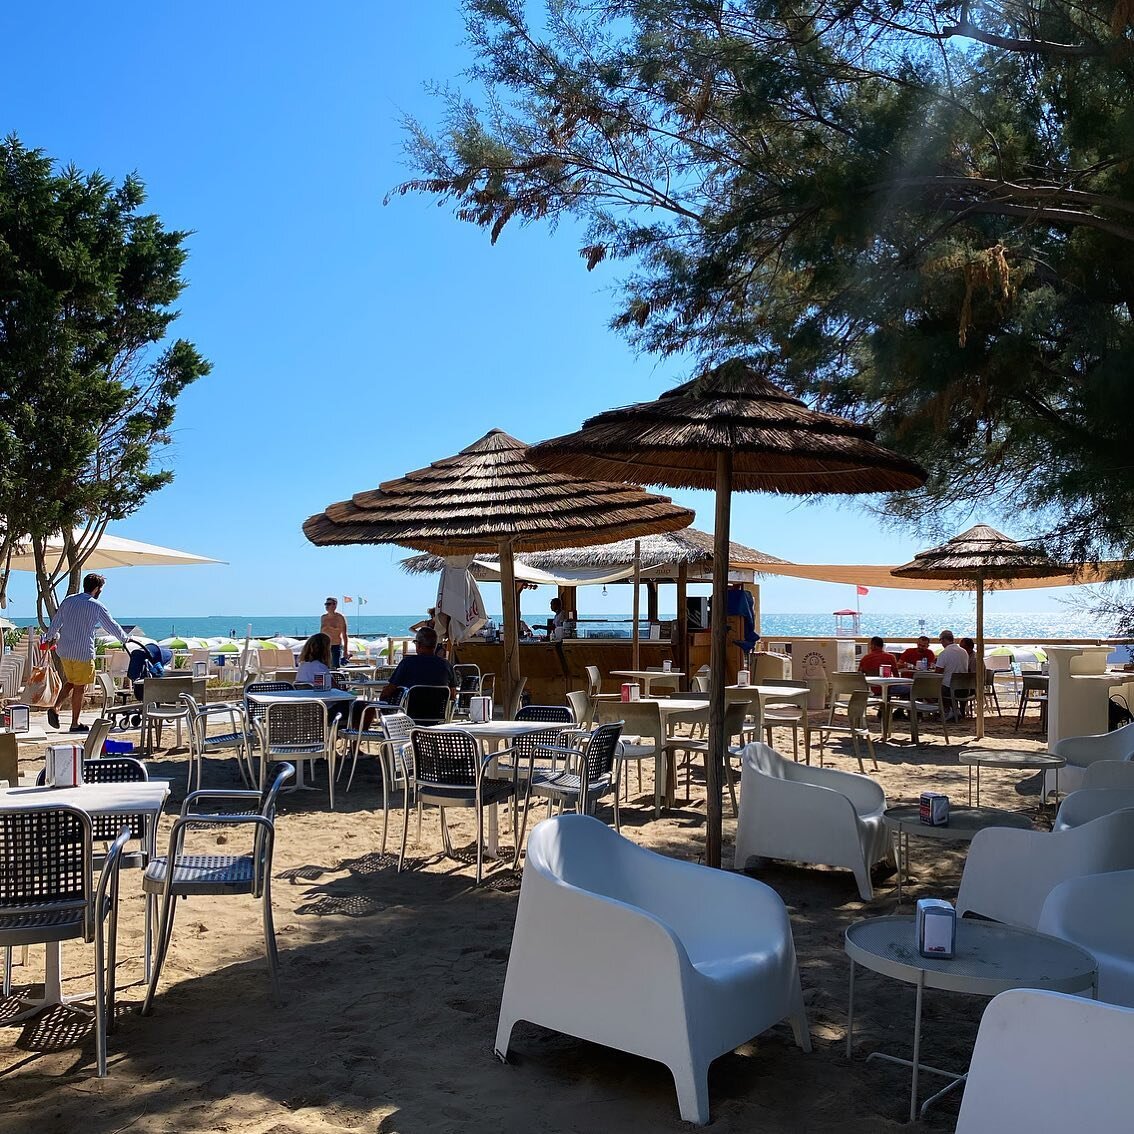 𝗖𝗛𝗜𝗢𝗦𝗖𝗢 𝗕𝗔𝗚𝗡𝗢 𝗠𝗔𝗥𝗖𝗢𝗡𝗜 🌴
#aperitivo #lunchtime #summervibes #beachlife #seaview #lidodivenezia